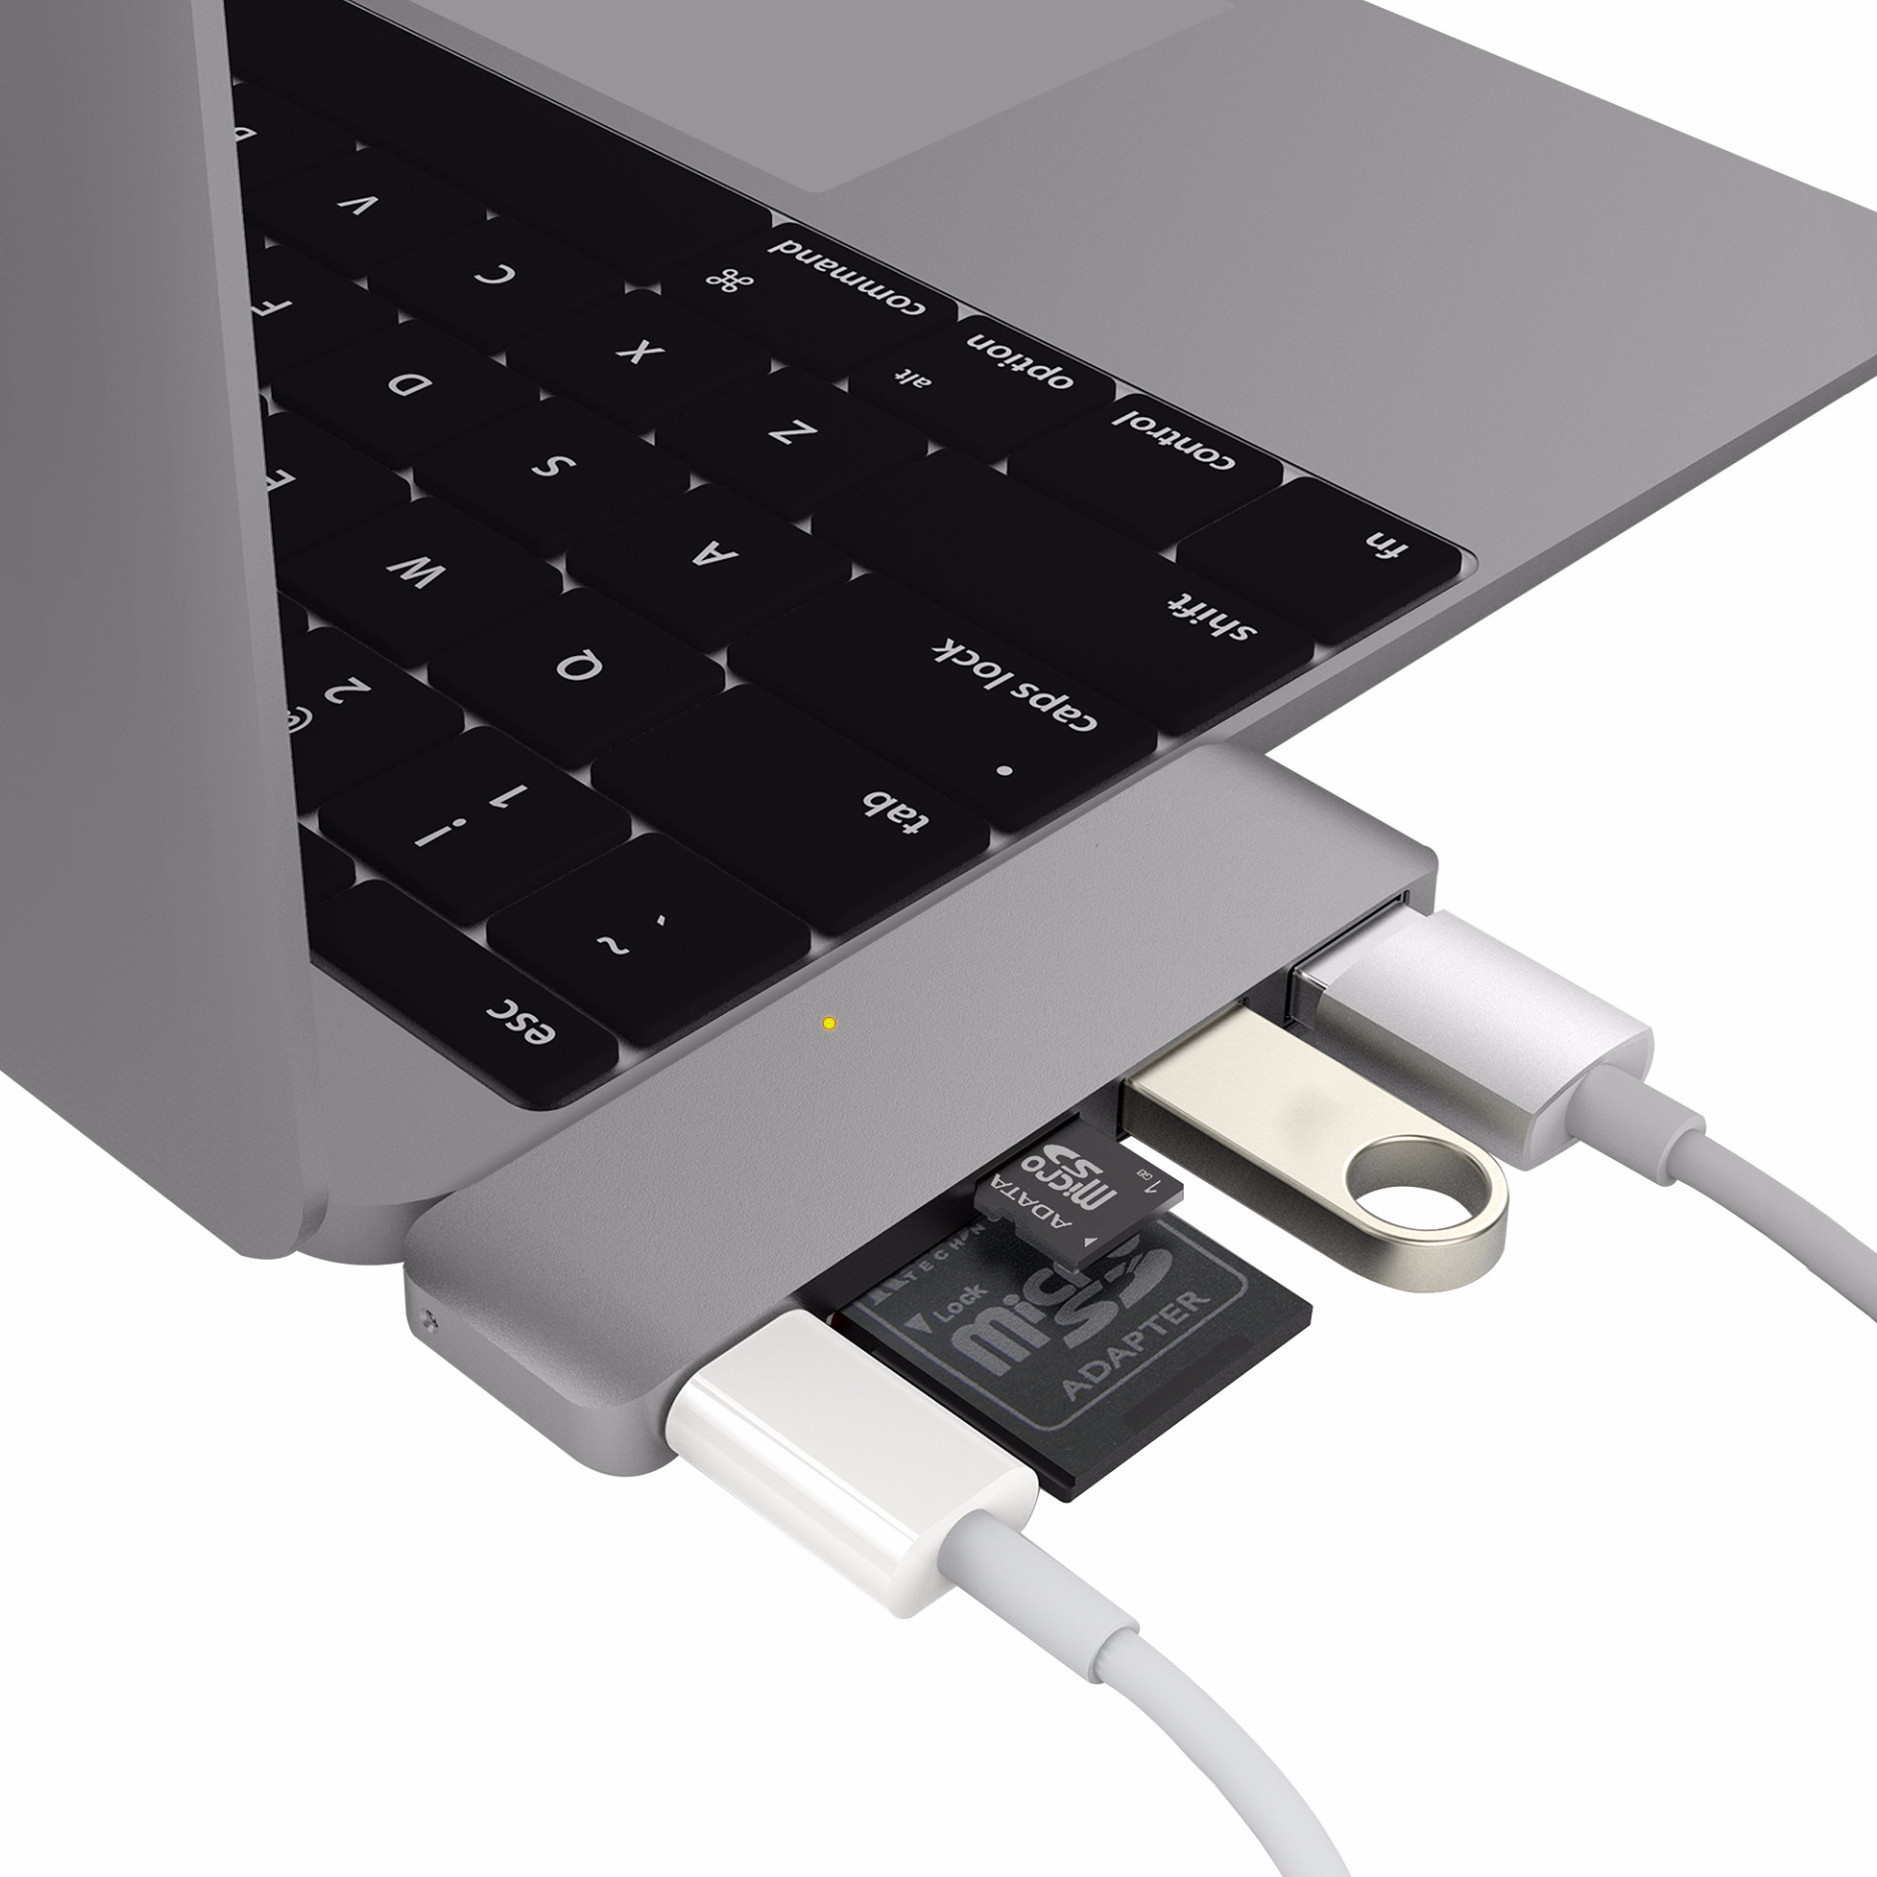 HYPERDRIVE USB TYPE-C 5-IN-1 HUB WITH PASS THROUGH CHARGING (FOR 2016 MACBOOK PRO &amp; 12″ MACBOOK, SURFACE) - Hàng Chính Hãng GN21B Gray